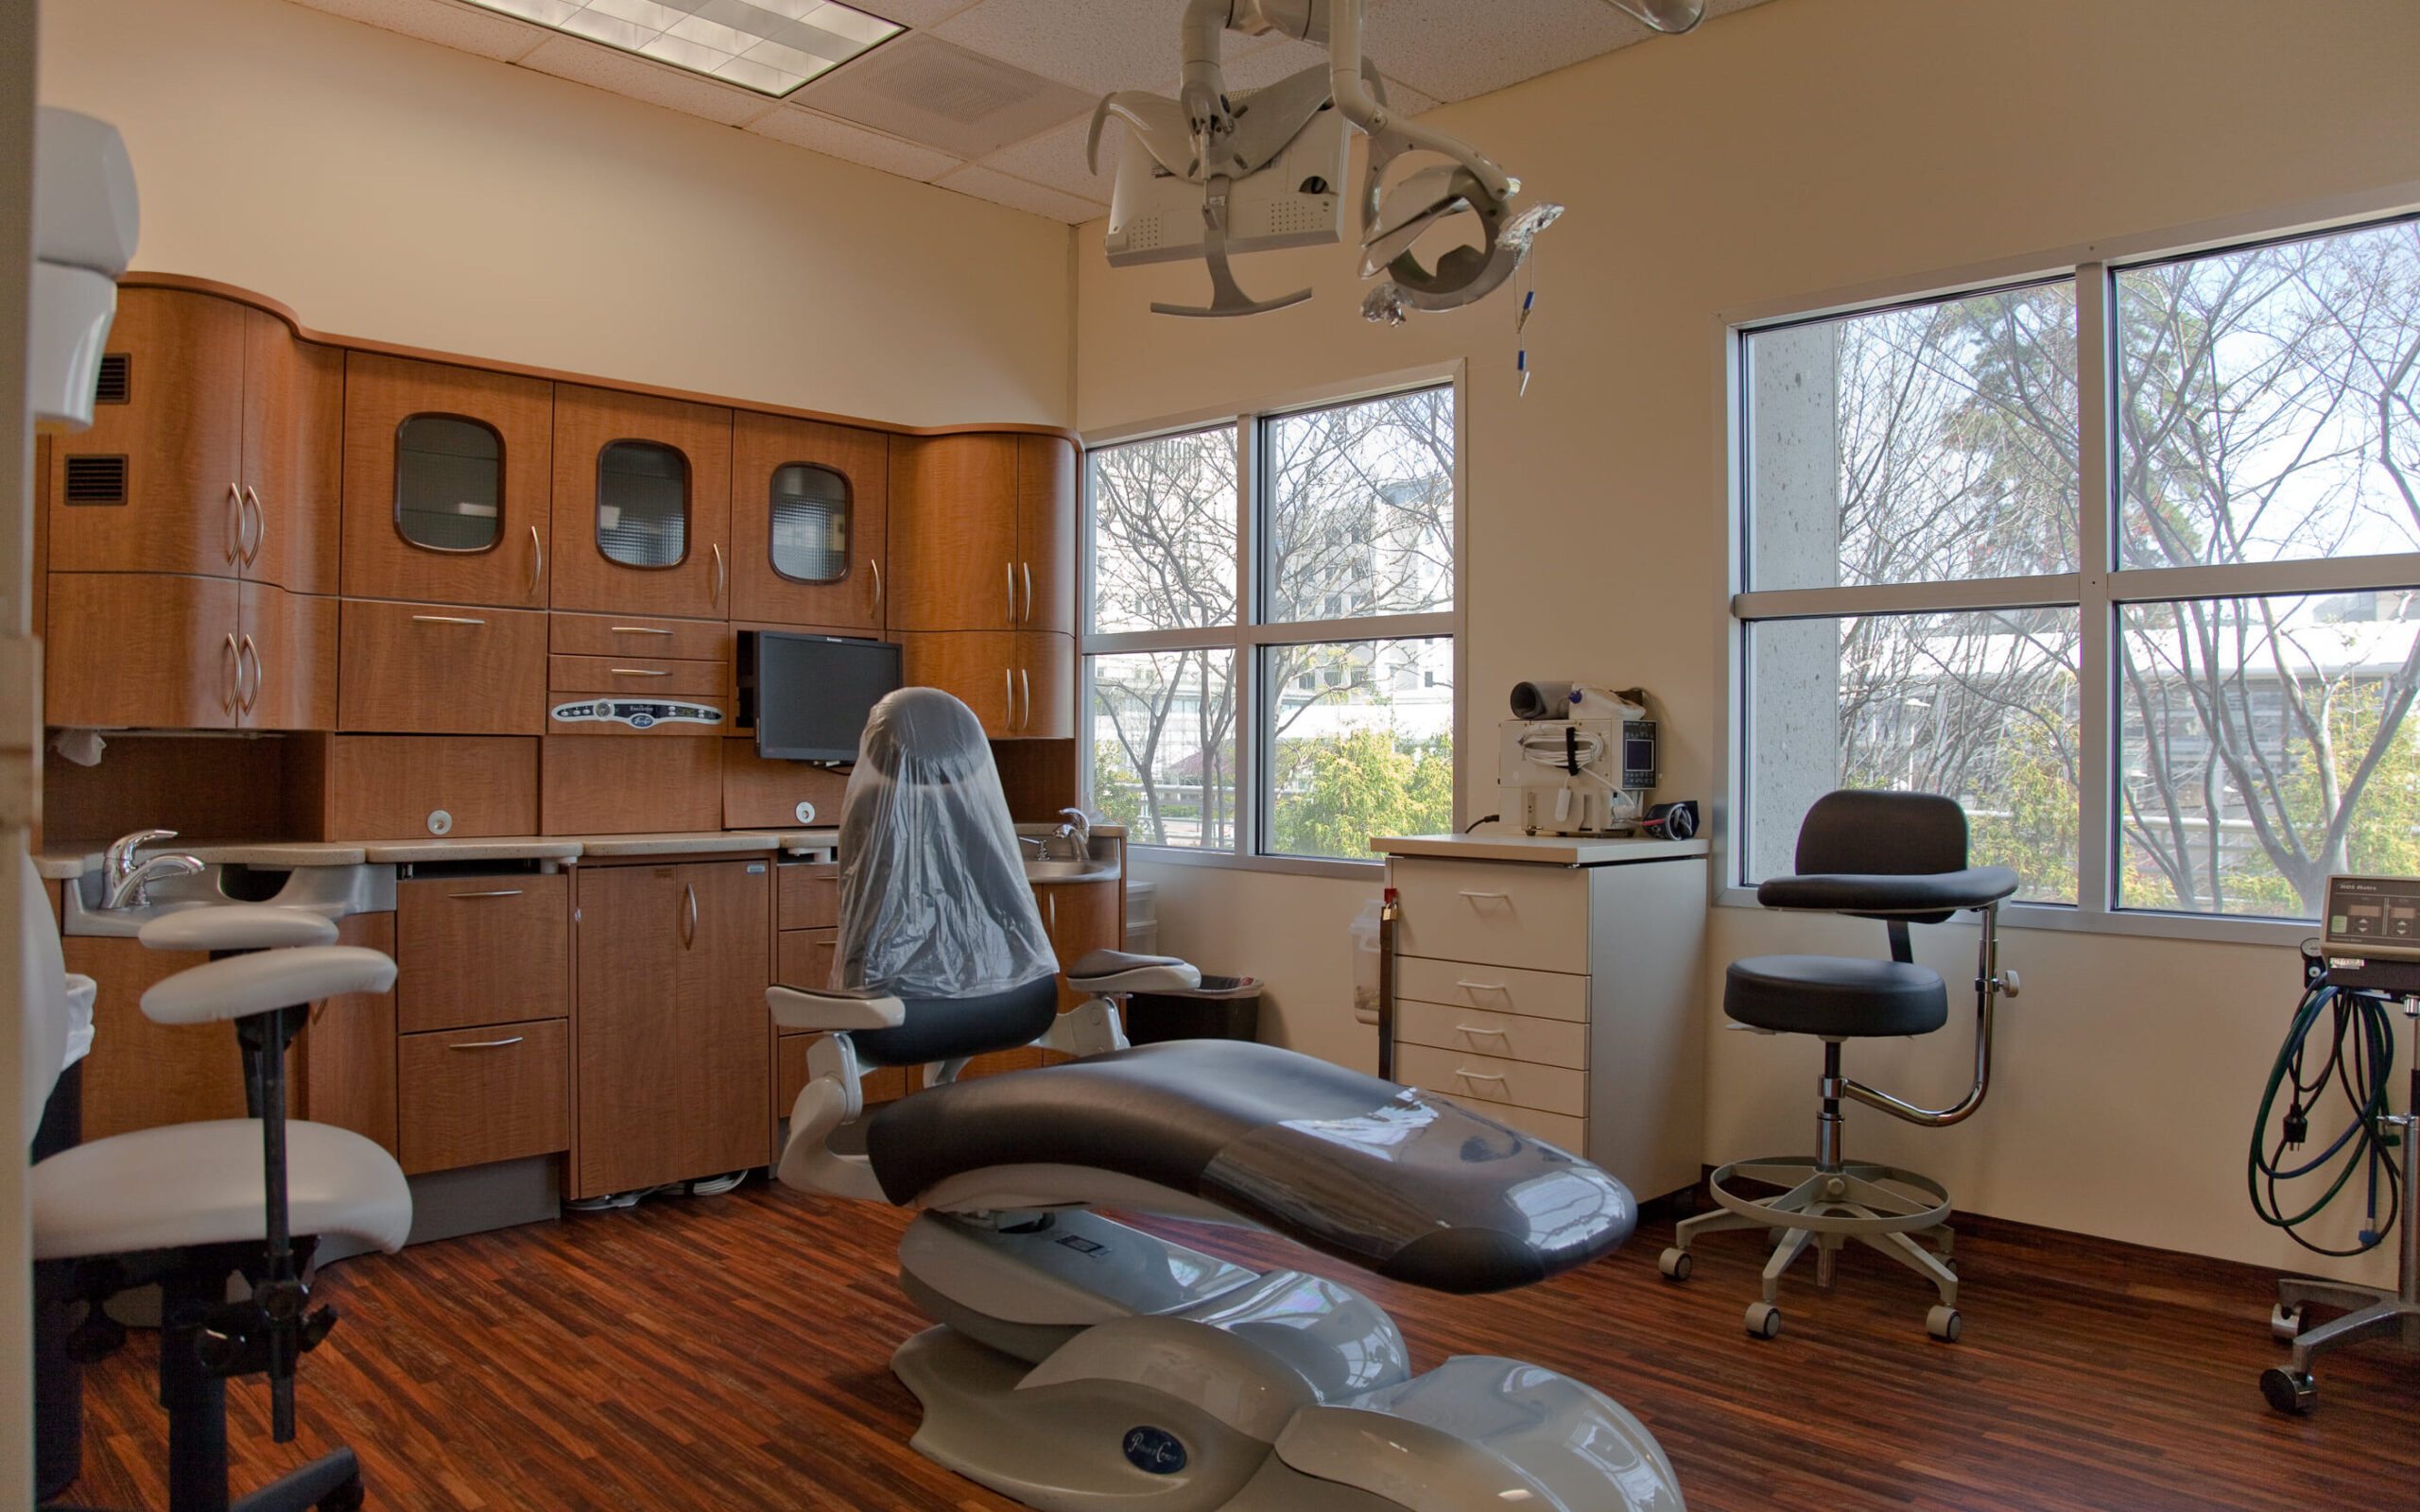 Dental hygiene simulation classroom at UNC Chapel Hill